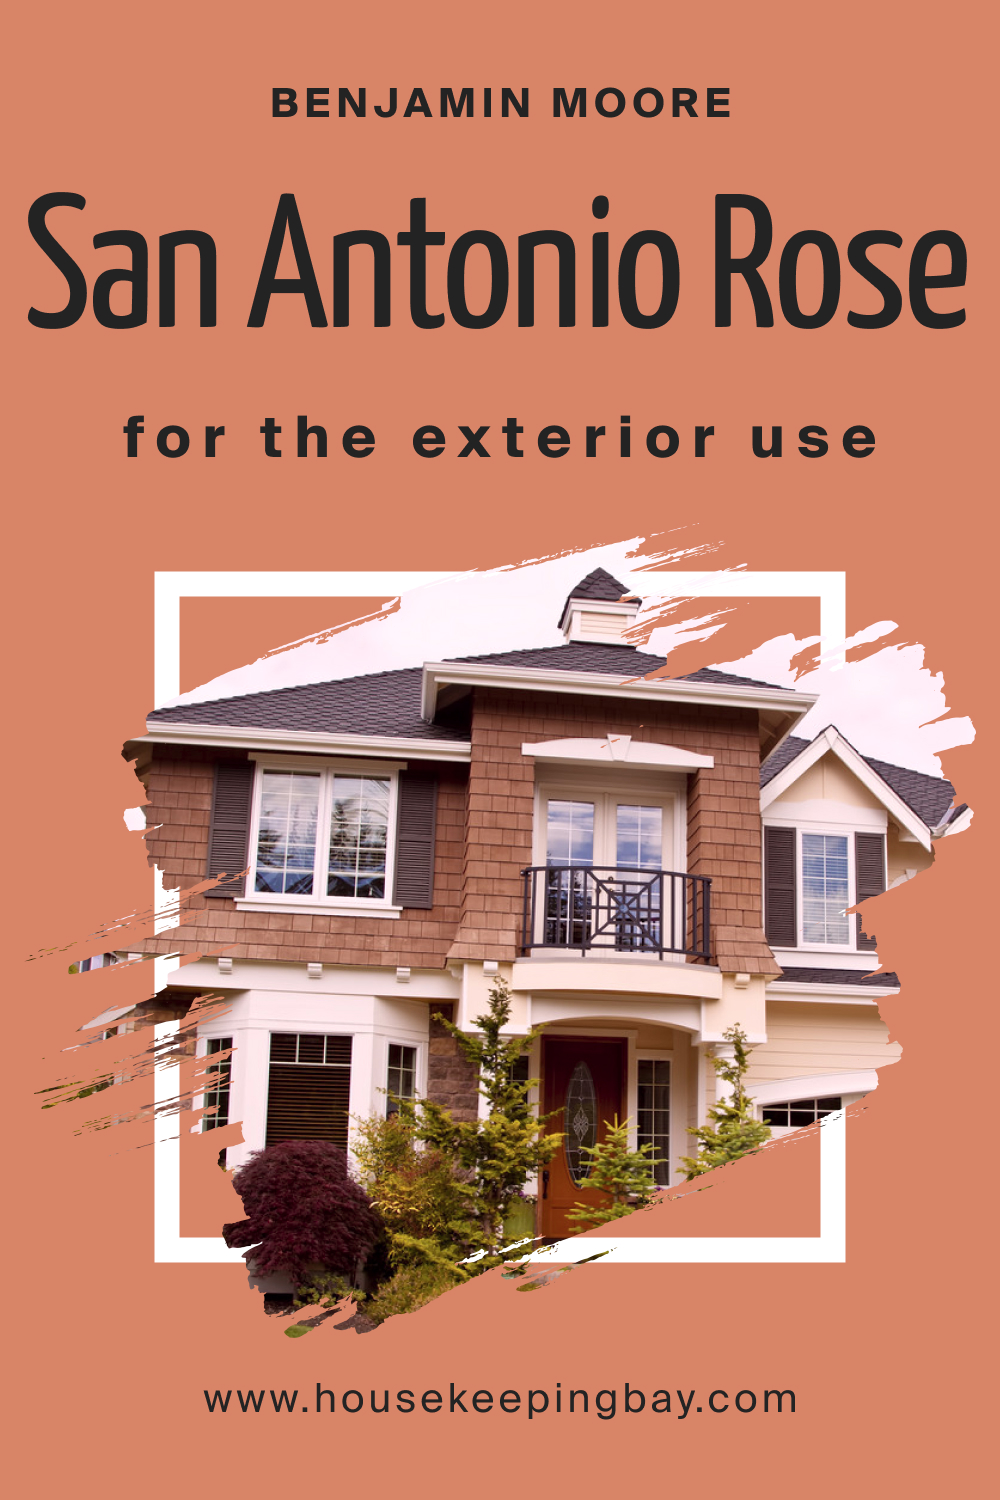 Benjamin Moore. San Antonio Rose 027 for the Exterior Use